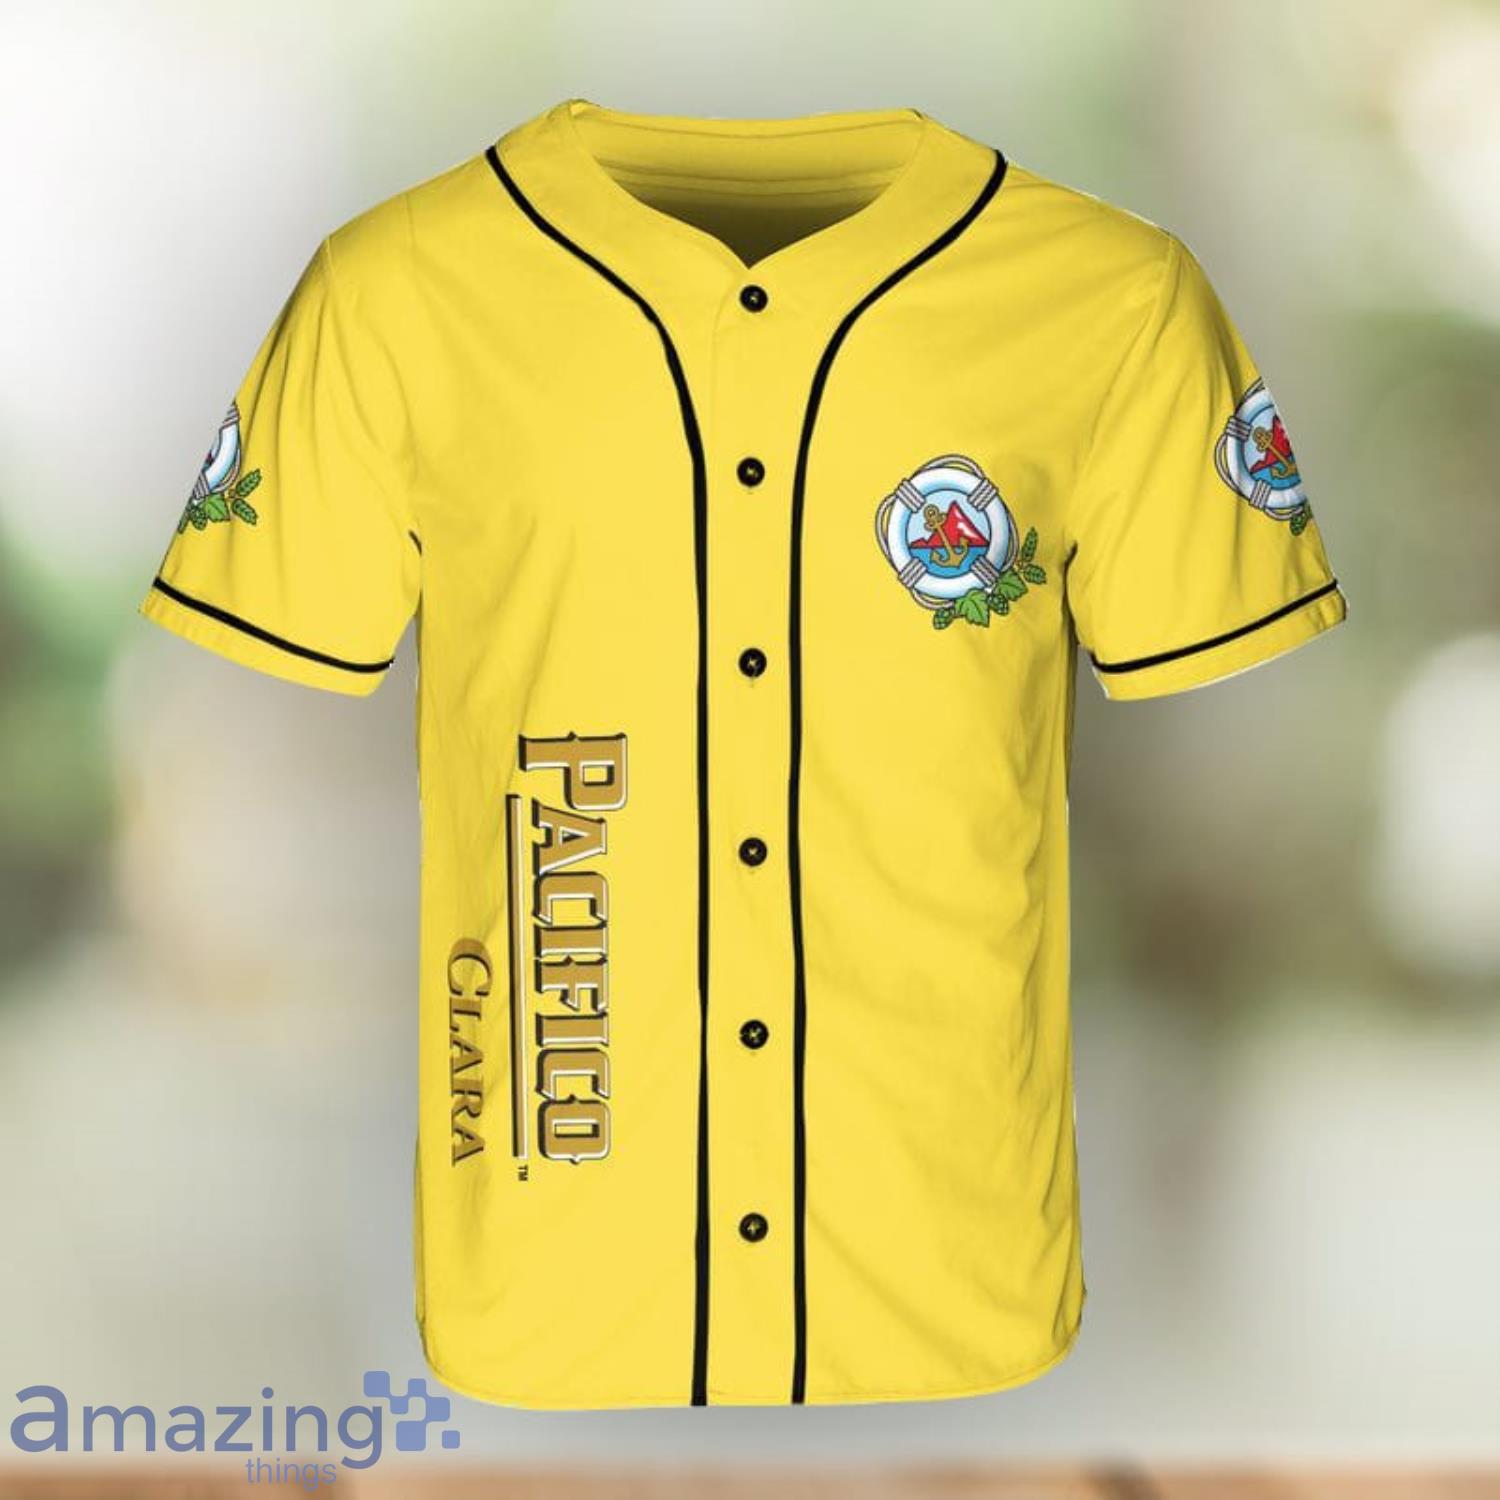 Women's Yellow Baseball Jersey Shirt